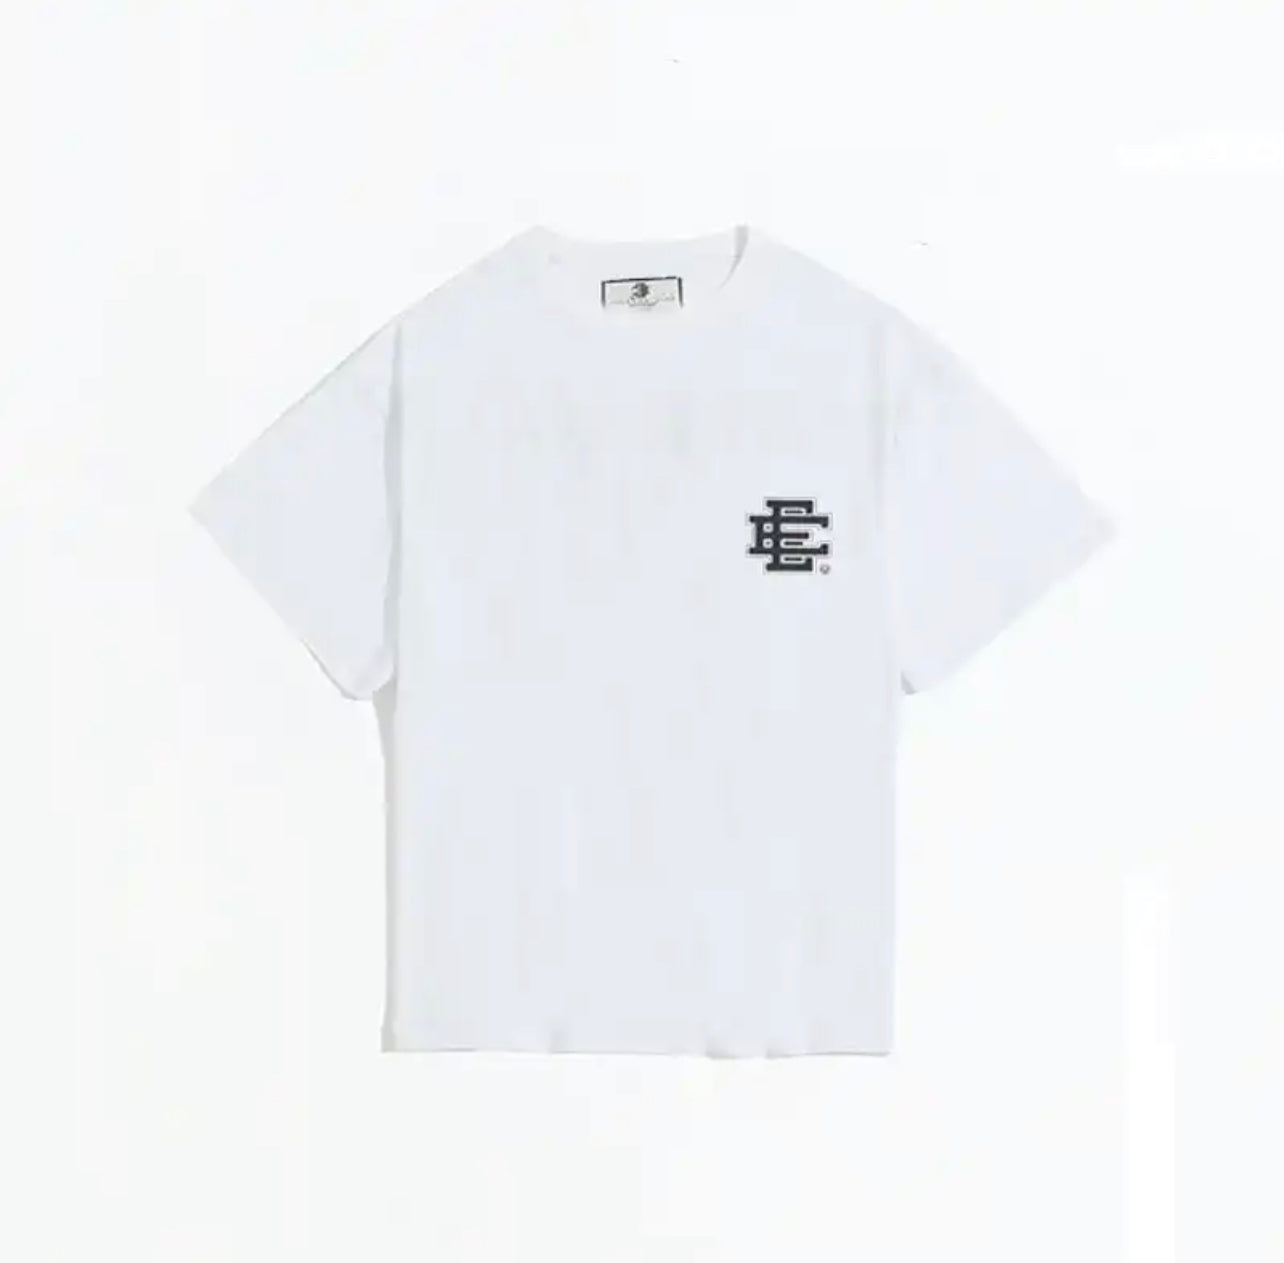 ee-shirt wht 6k – EEshortsonline